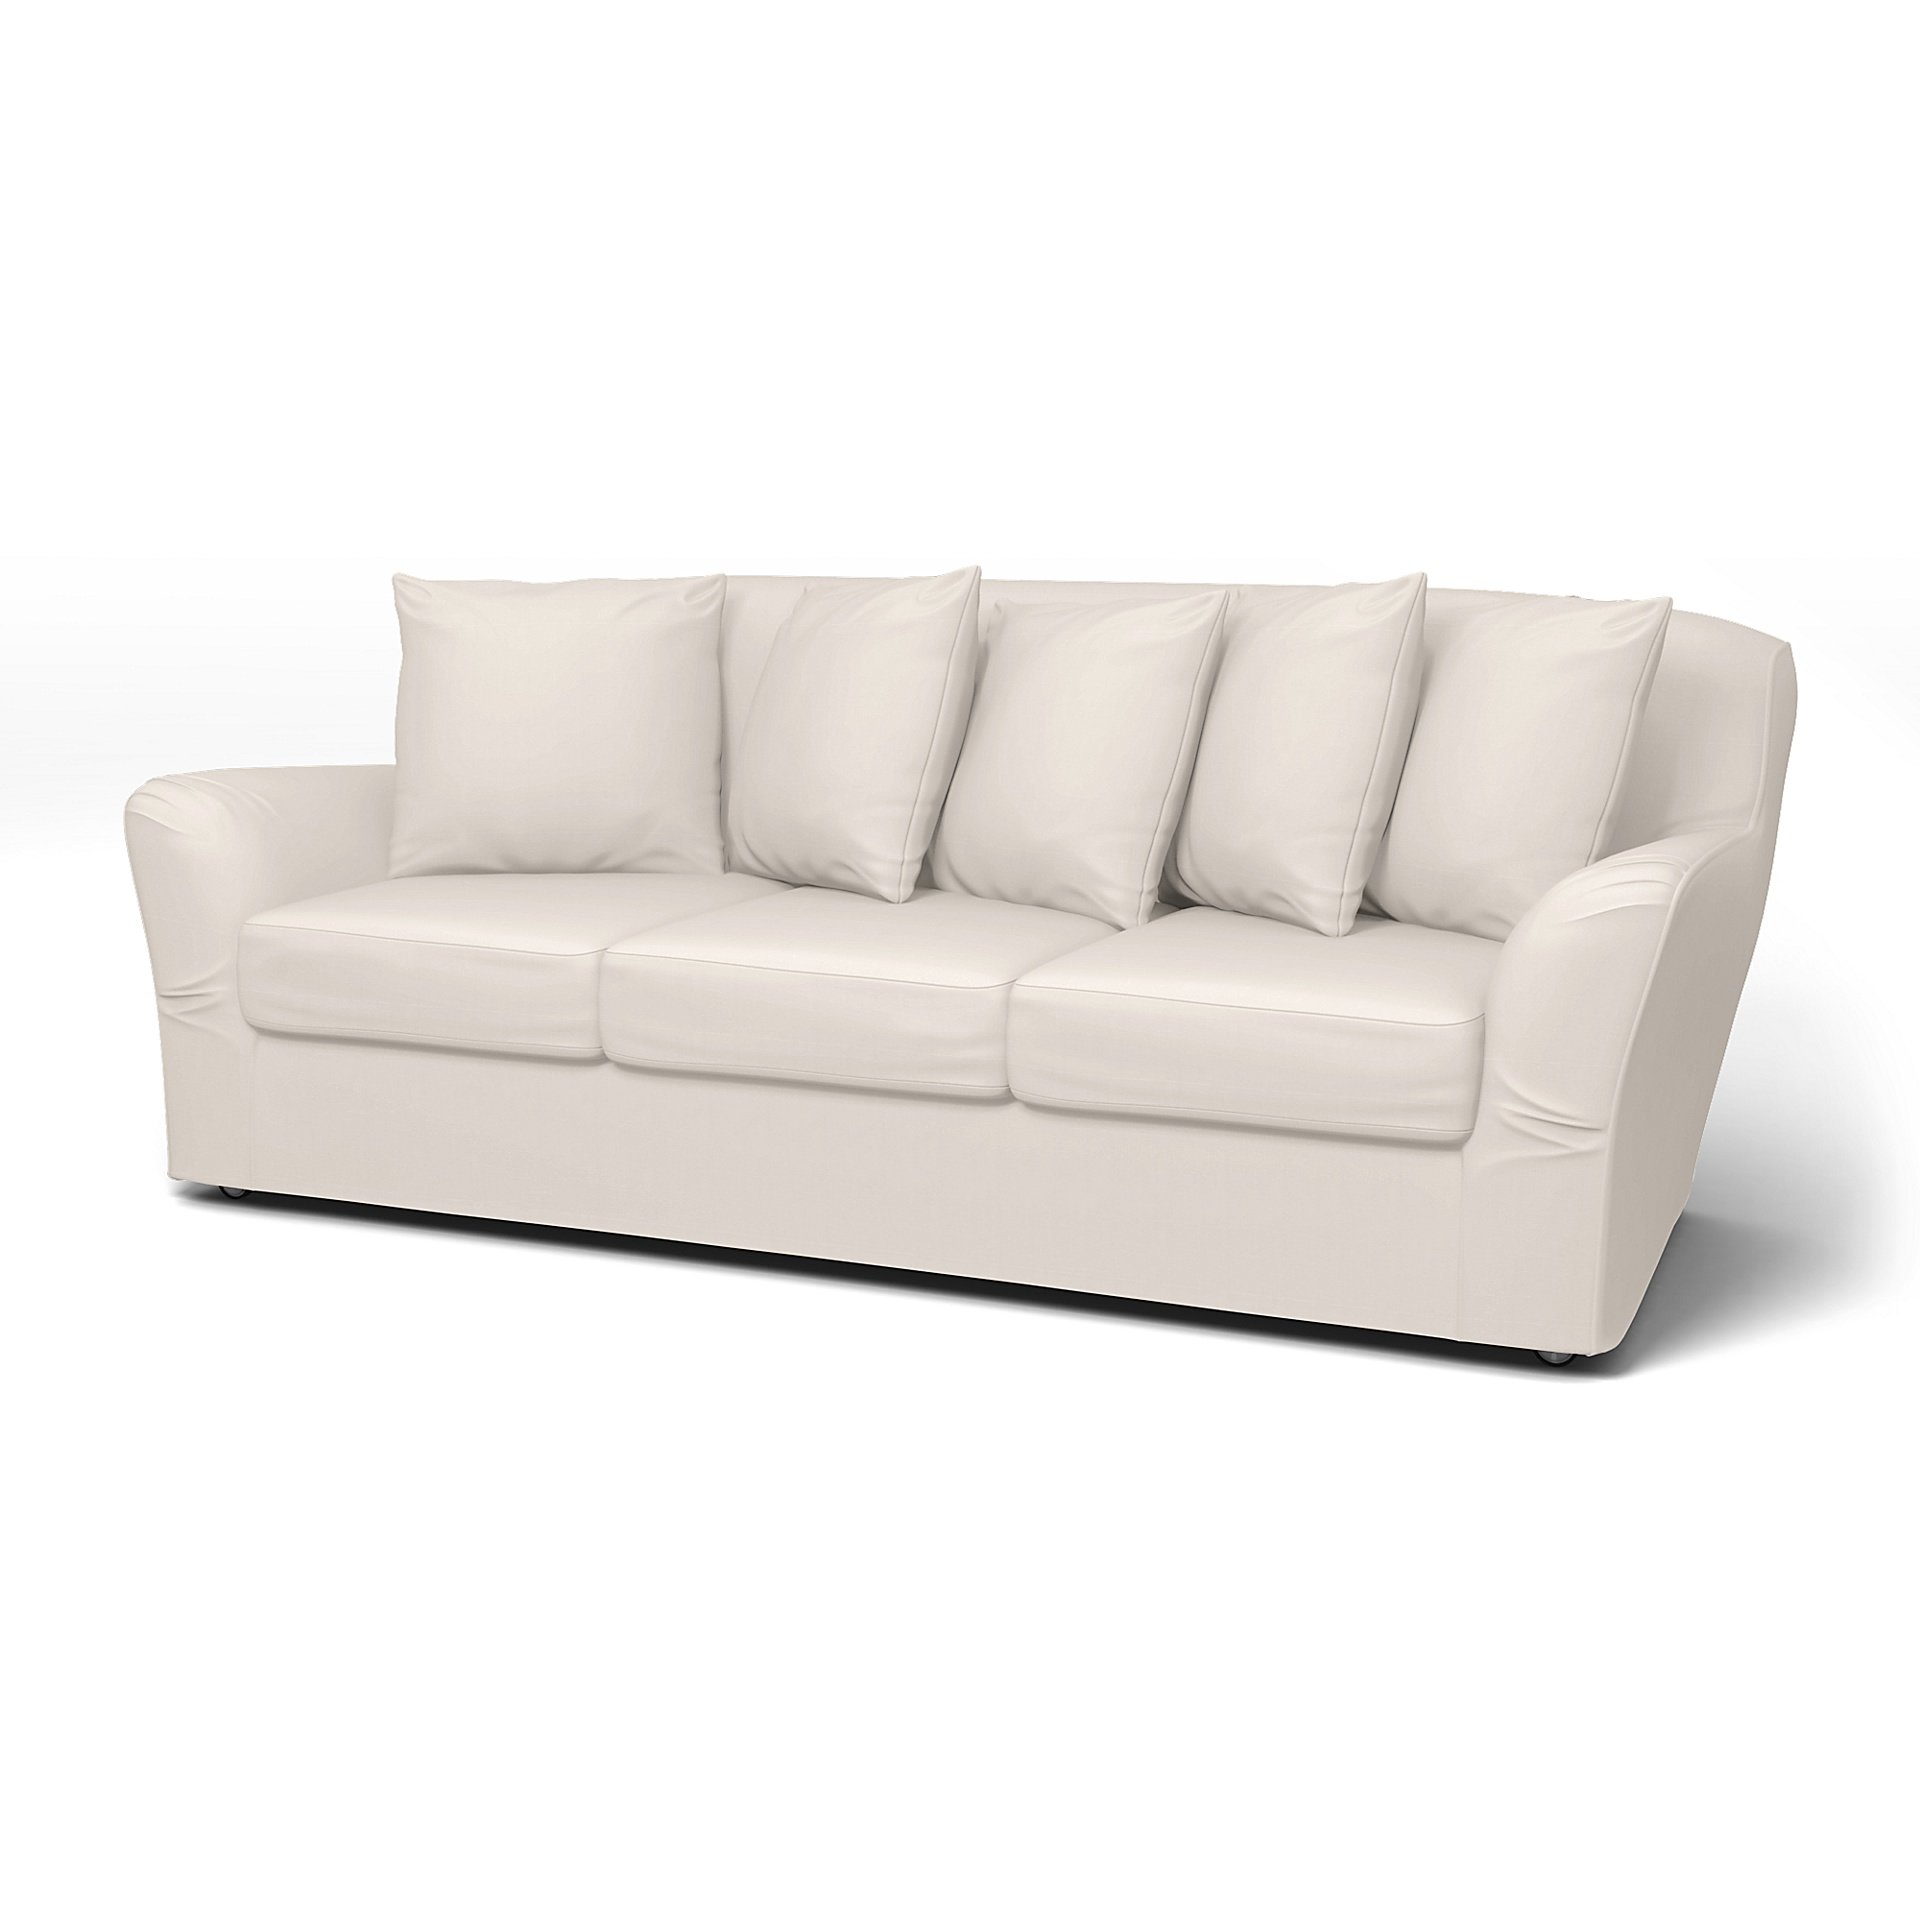 IKEA - Tomelilla 3 seater sofa, Soft White, Cotton - Bemz